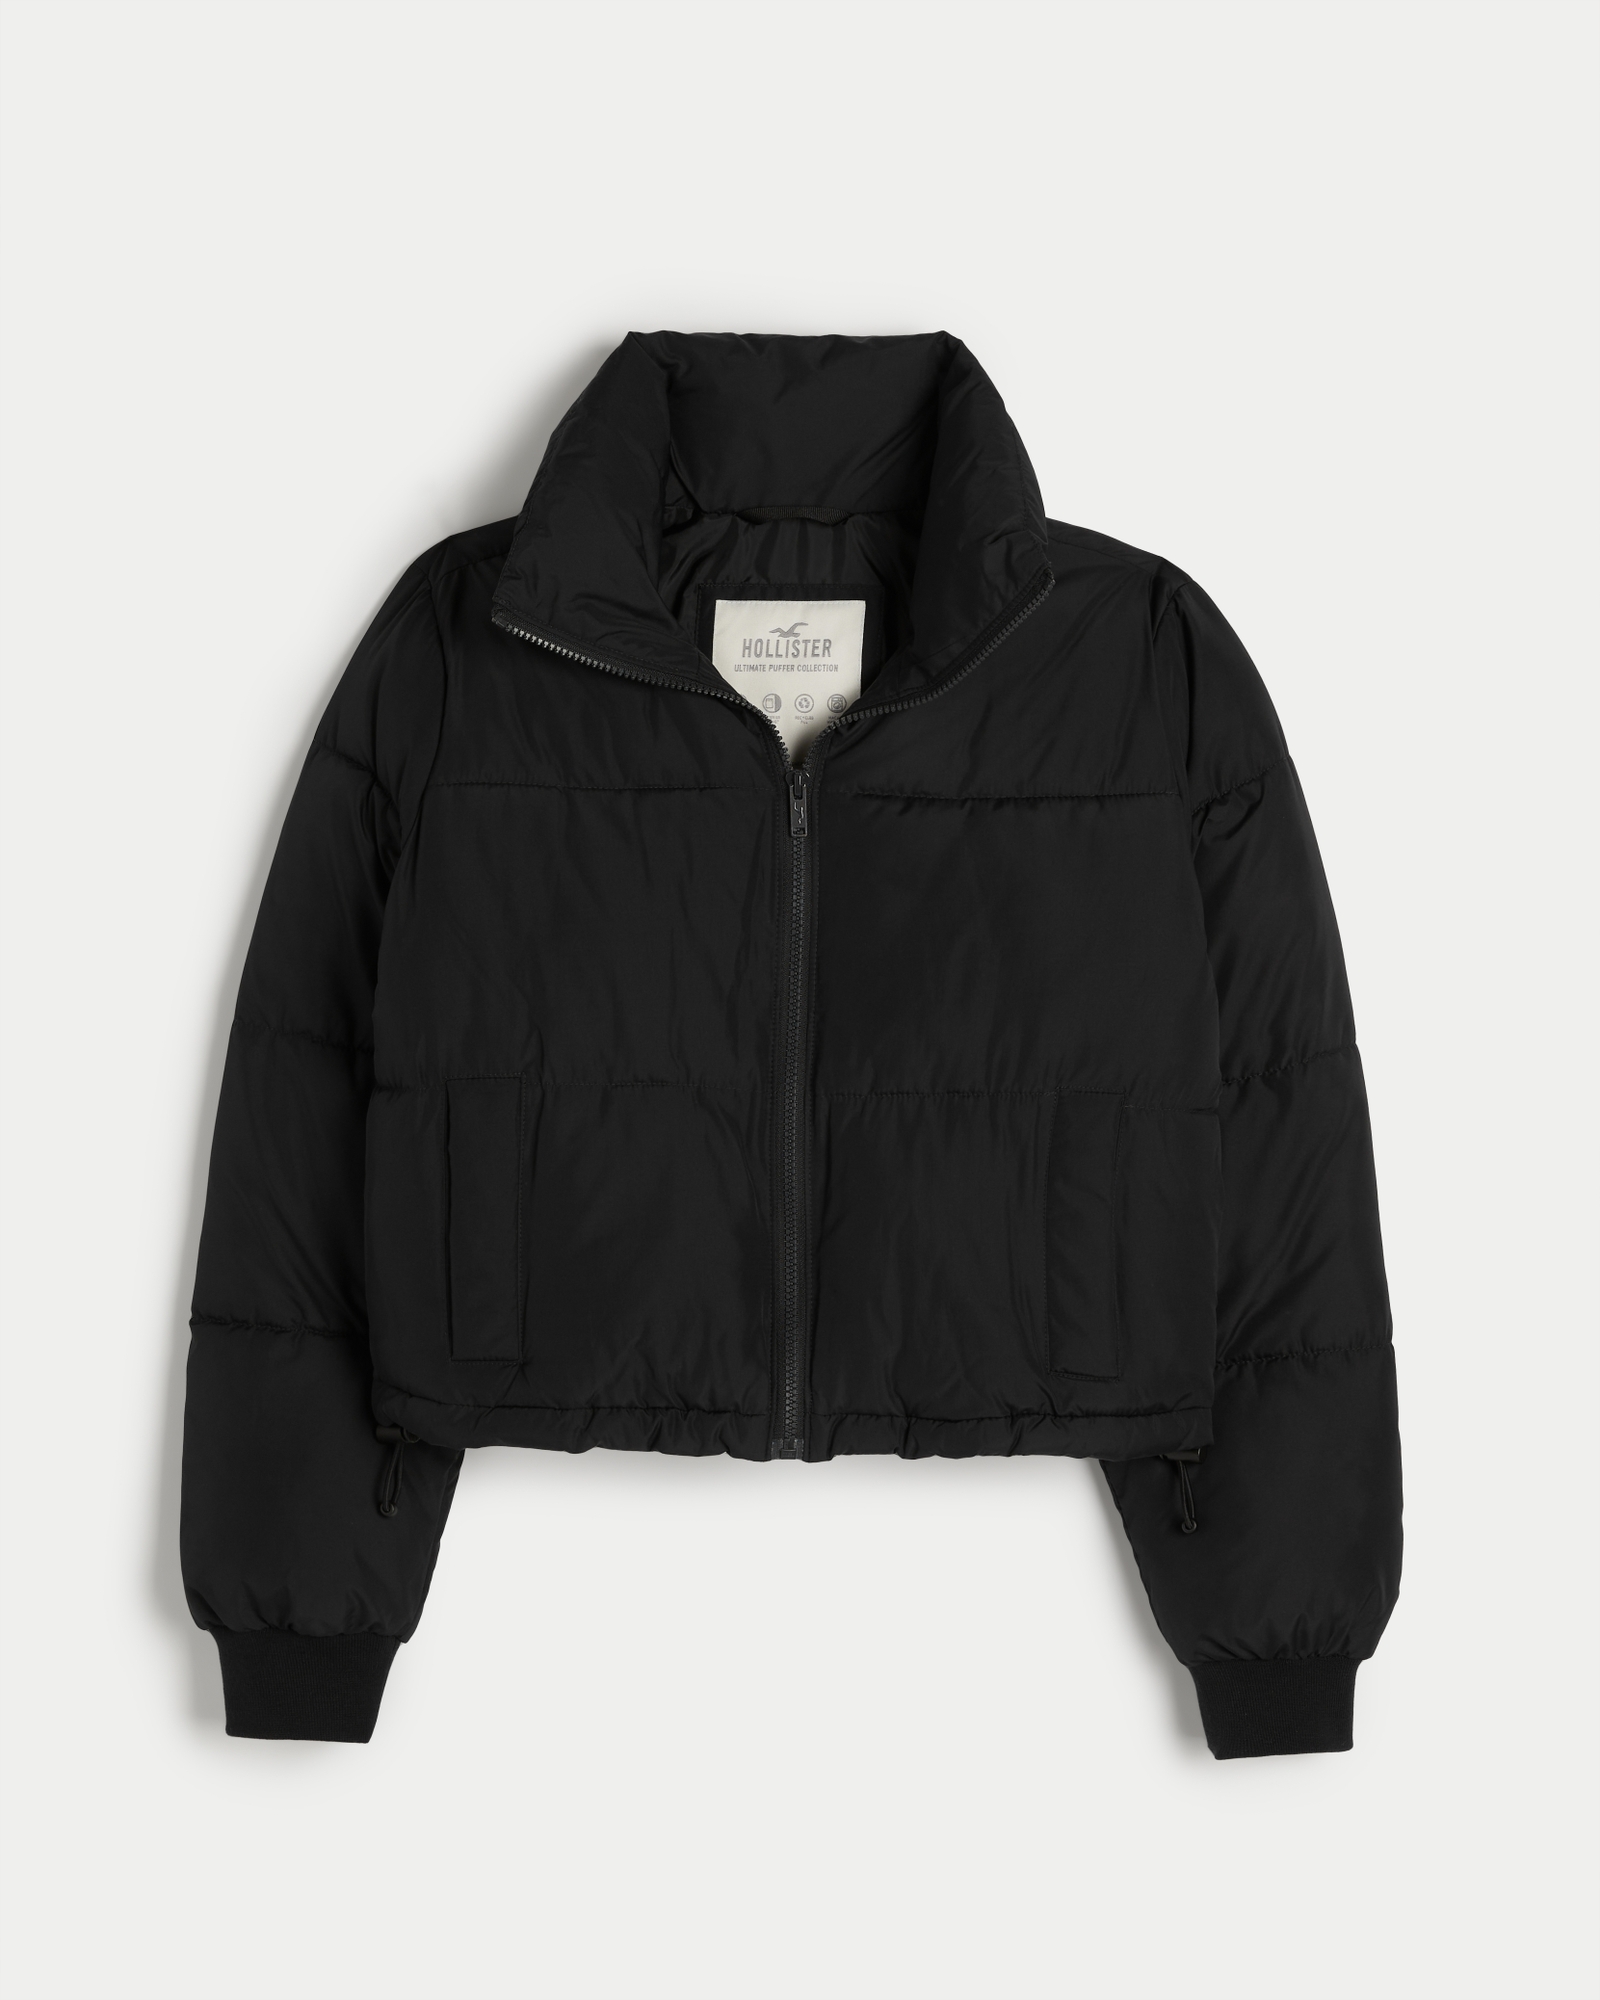 Hollister Womens Duck Down Puffer Coat Jacket XS Zip Front Black